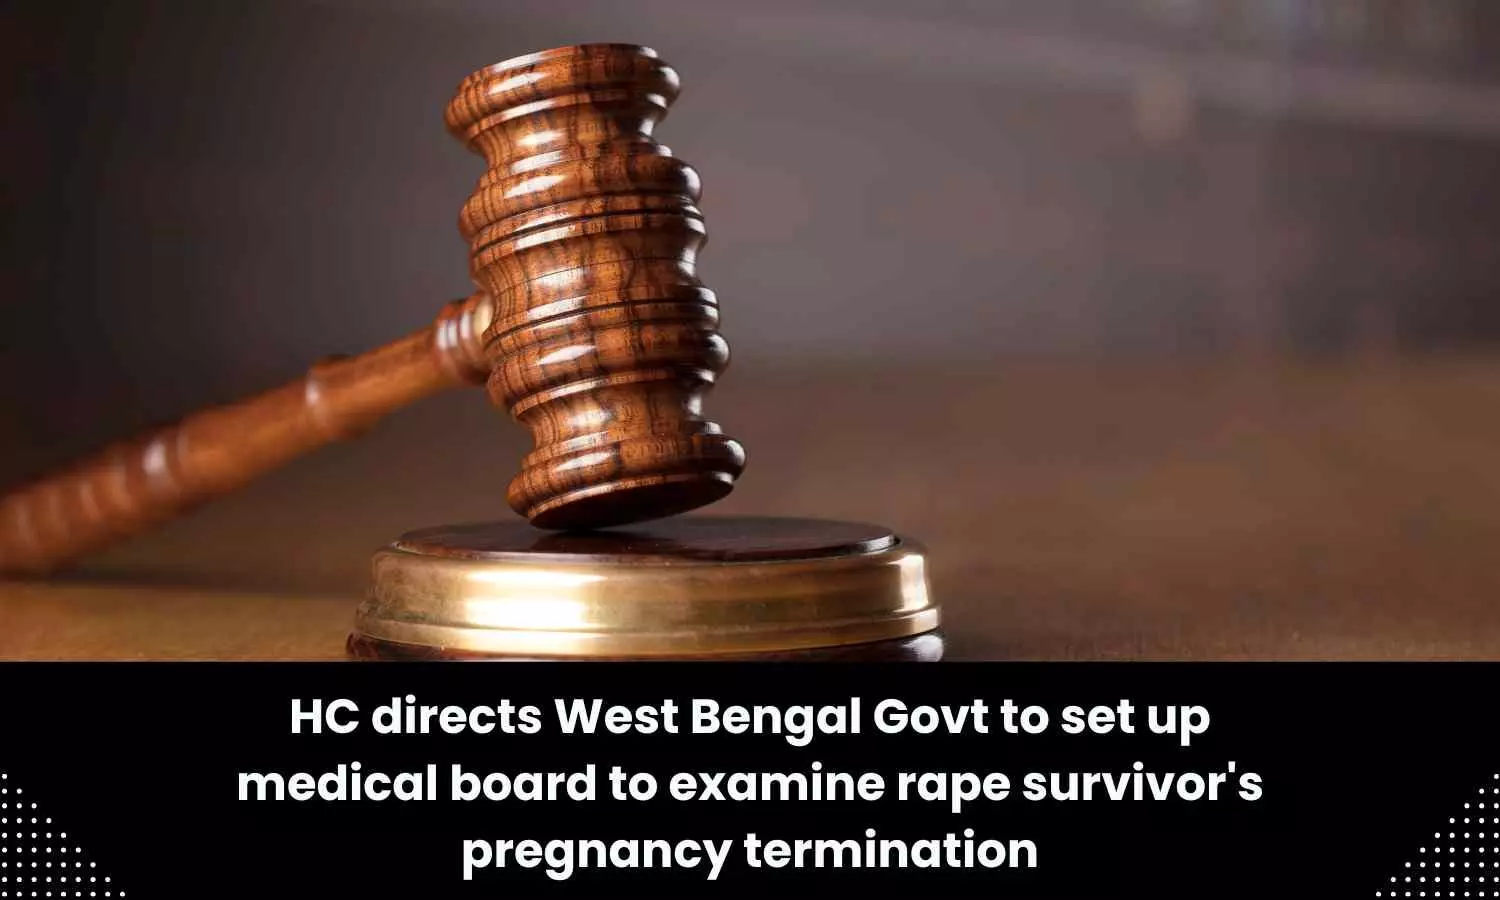 Set up medical board to evaluate risks of rape survivors pregnancy termination: Calcutta HC instructs West Bengal govt